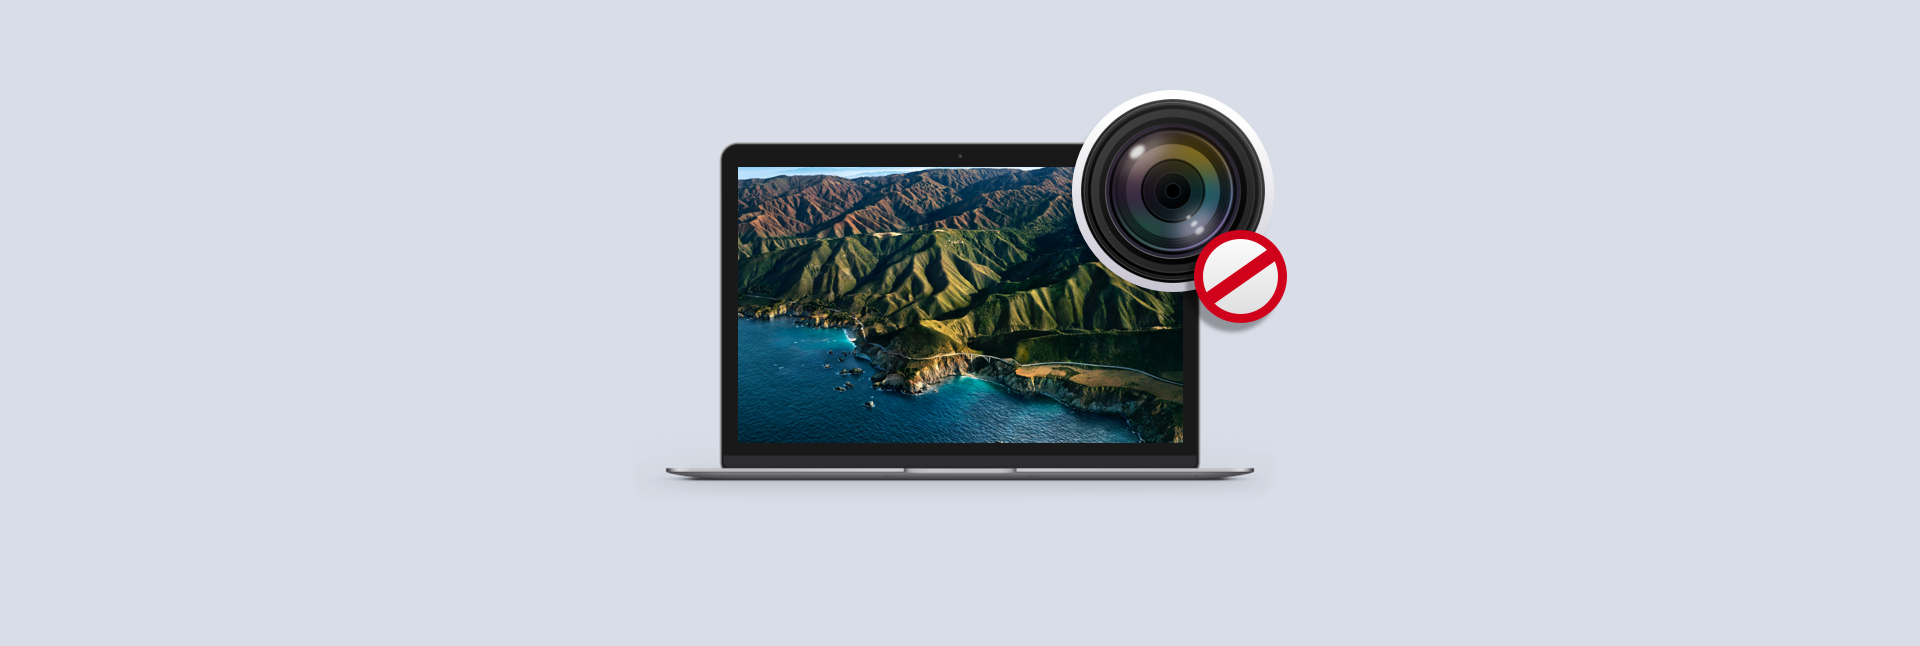 best internet security camera for mac 2017